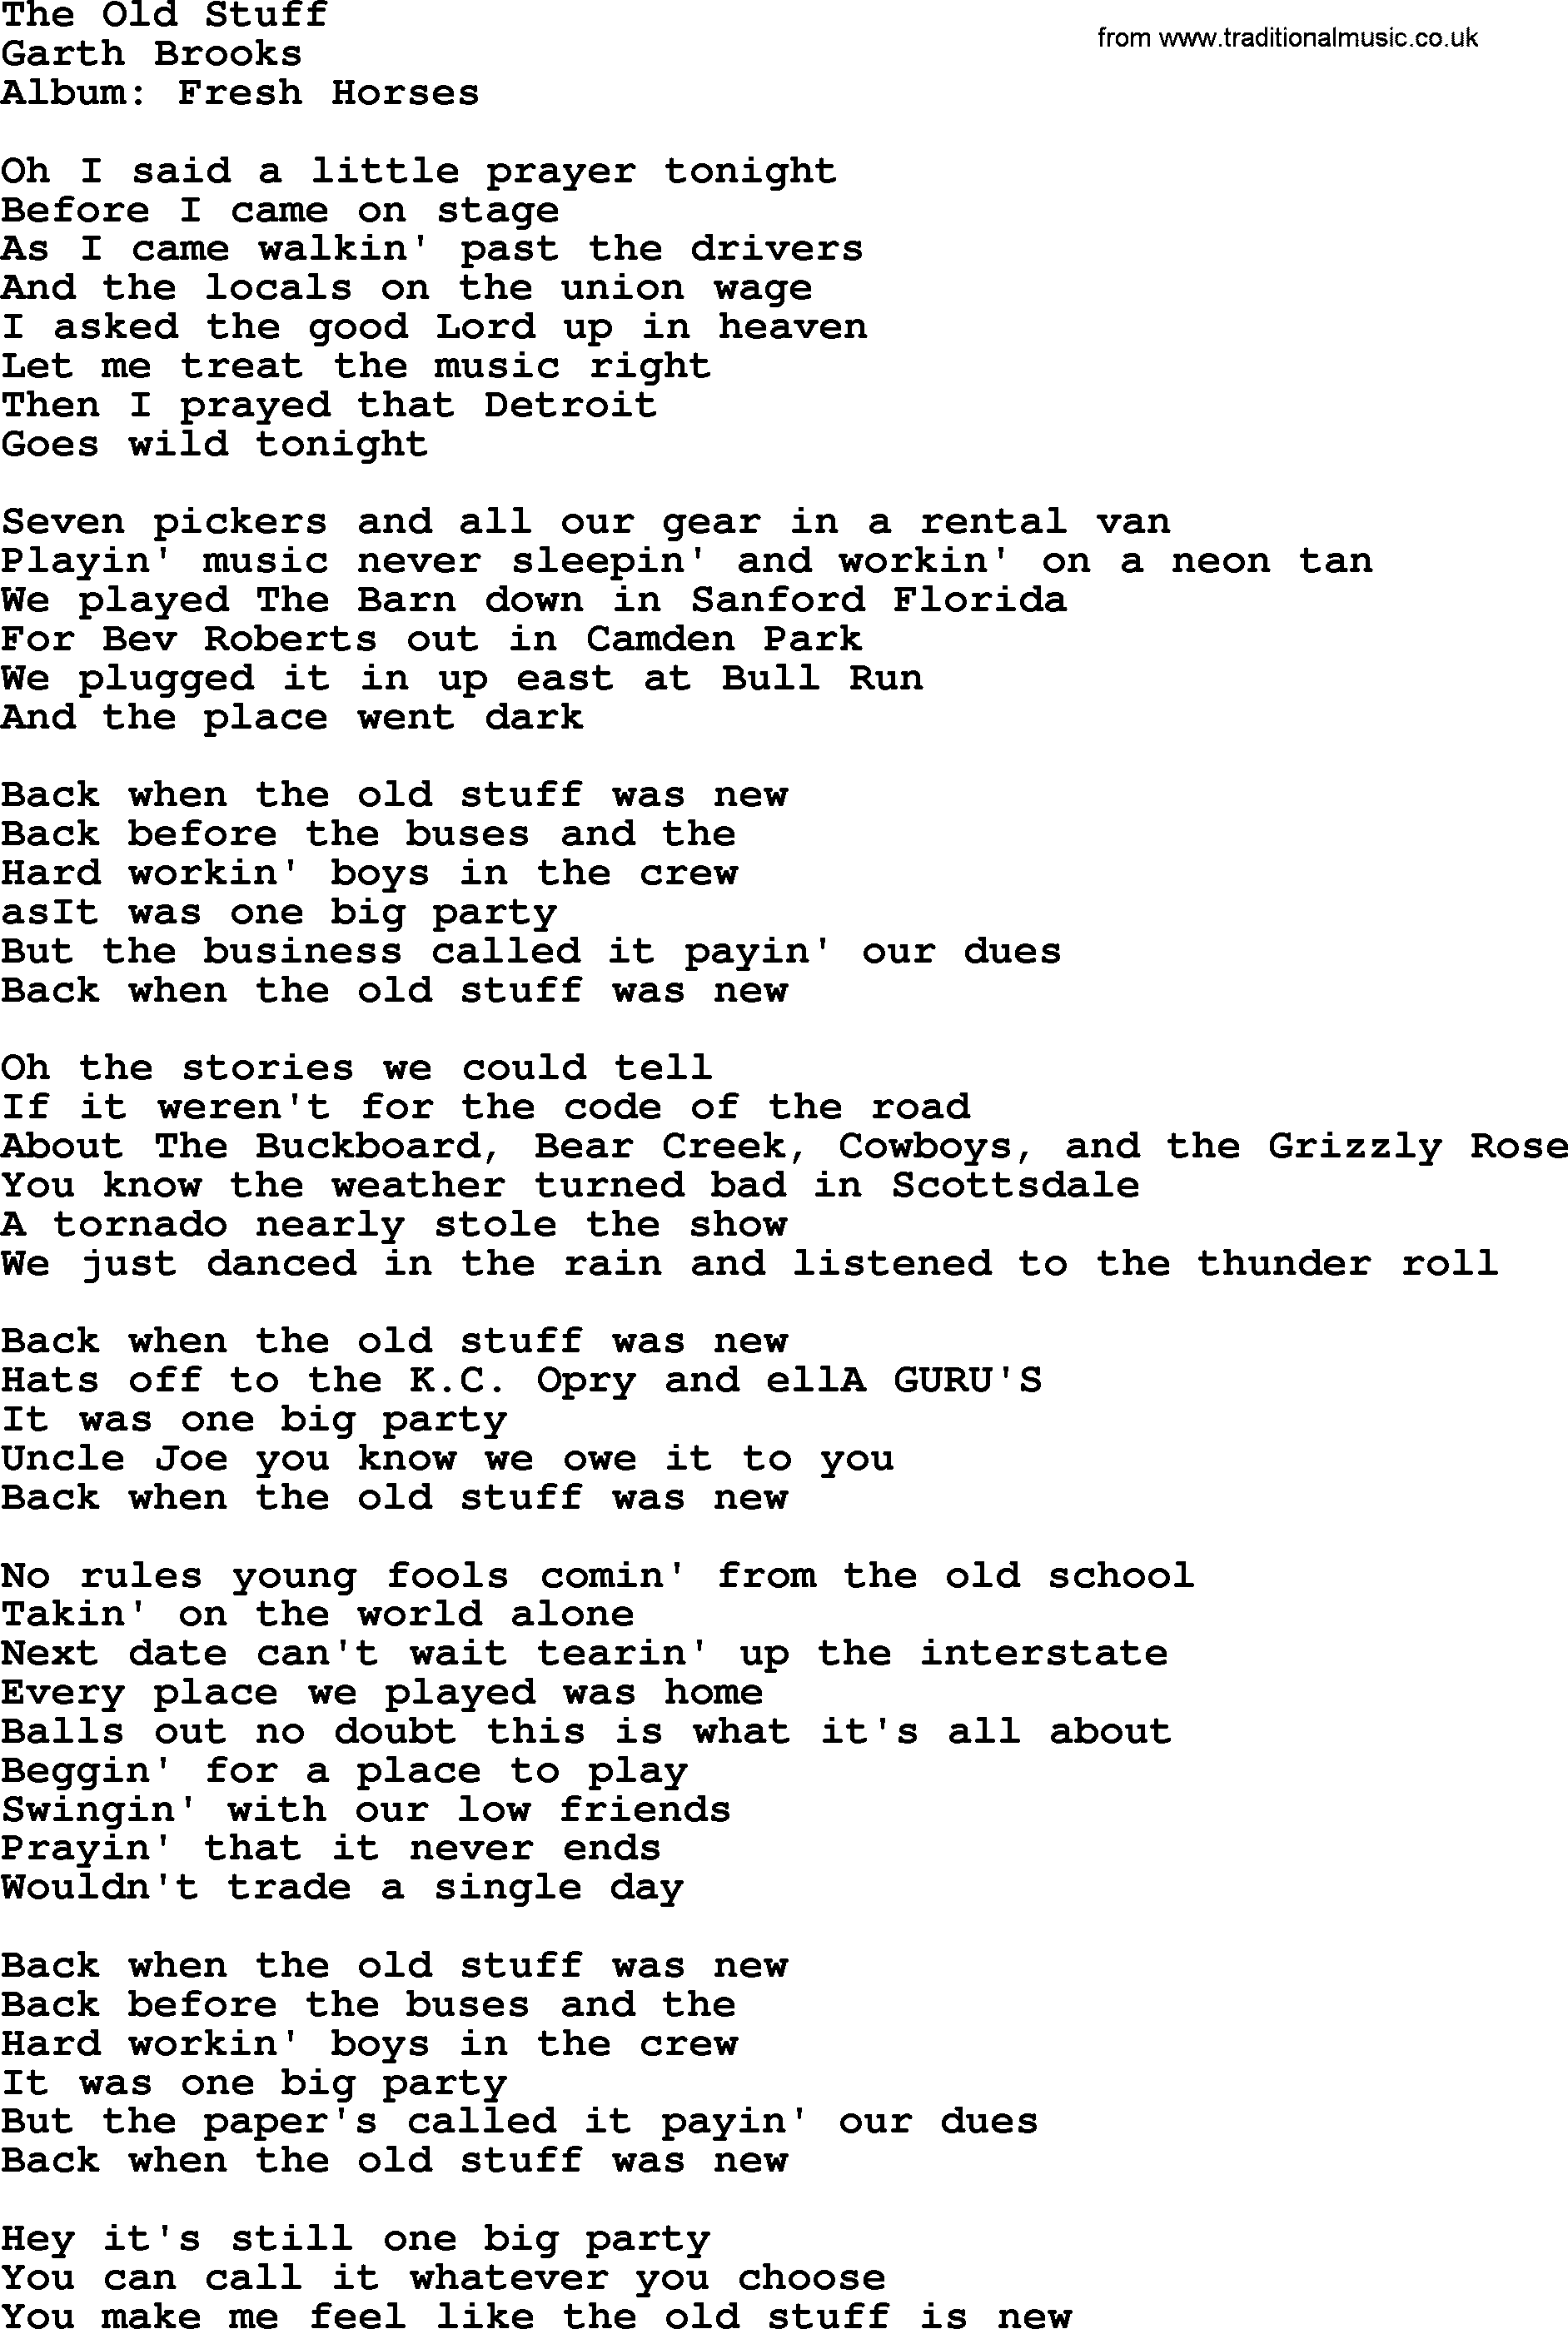 Garth Brooks song: The Old Stuff, lyrics